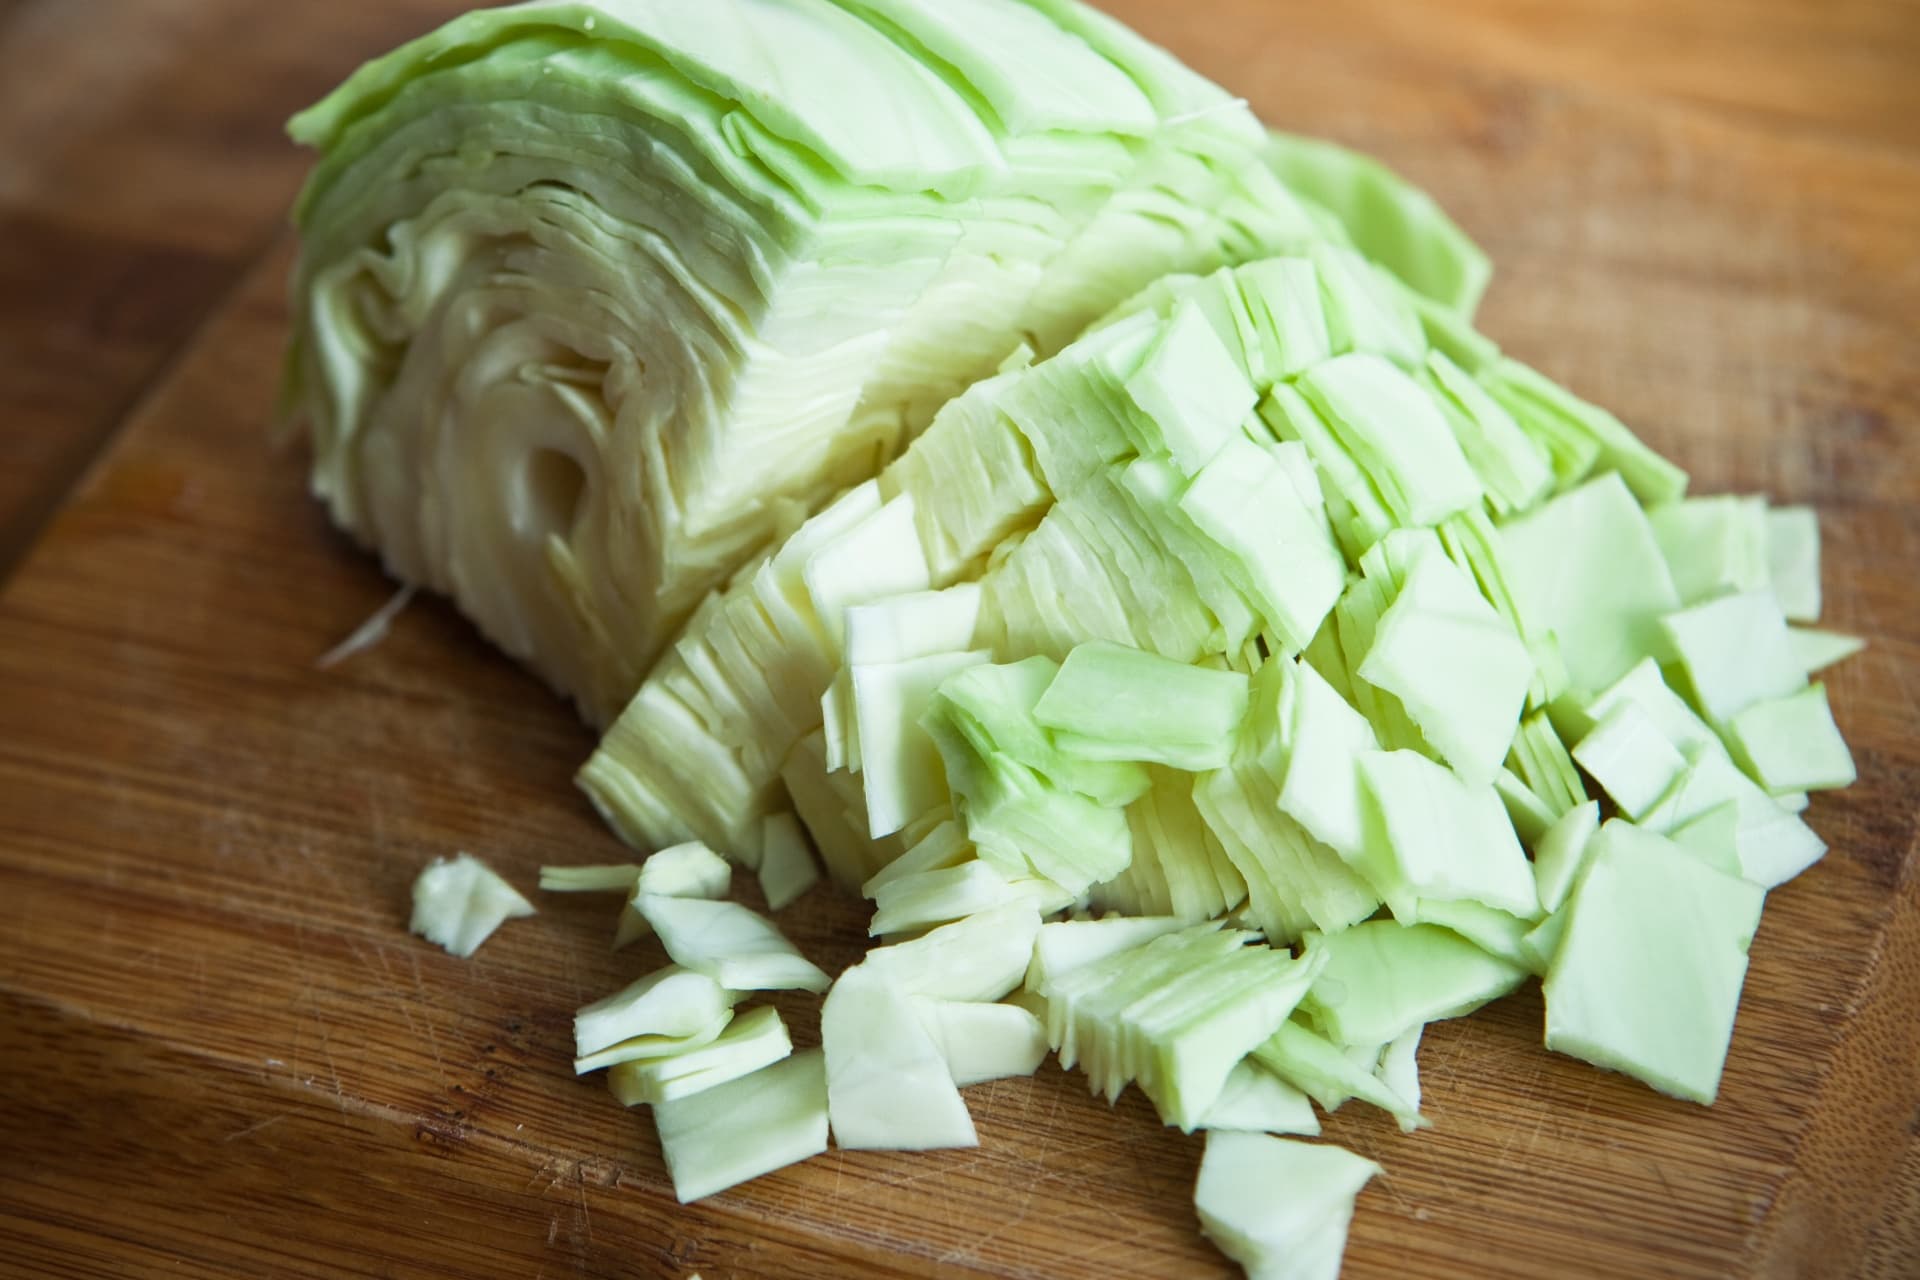 Stewed Cabbage